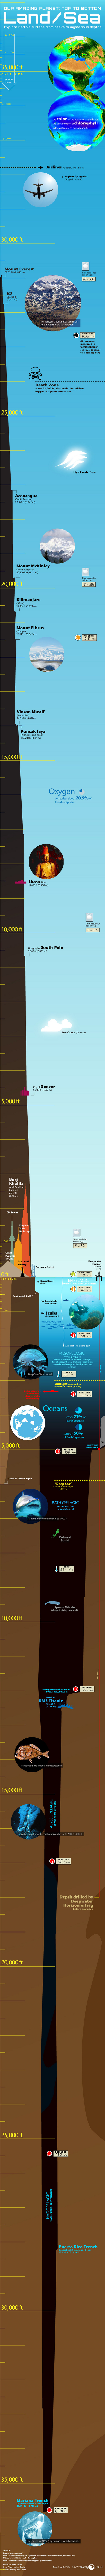 how deep is the ocean